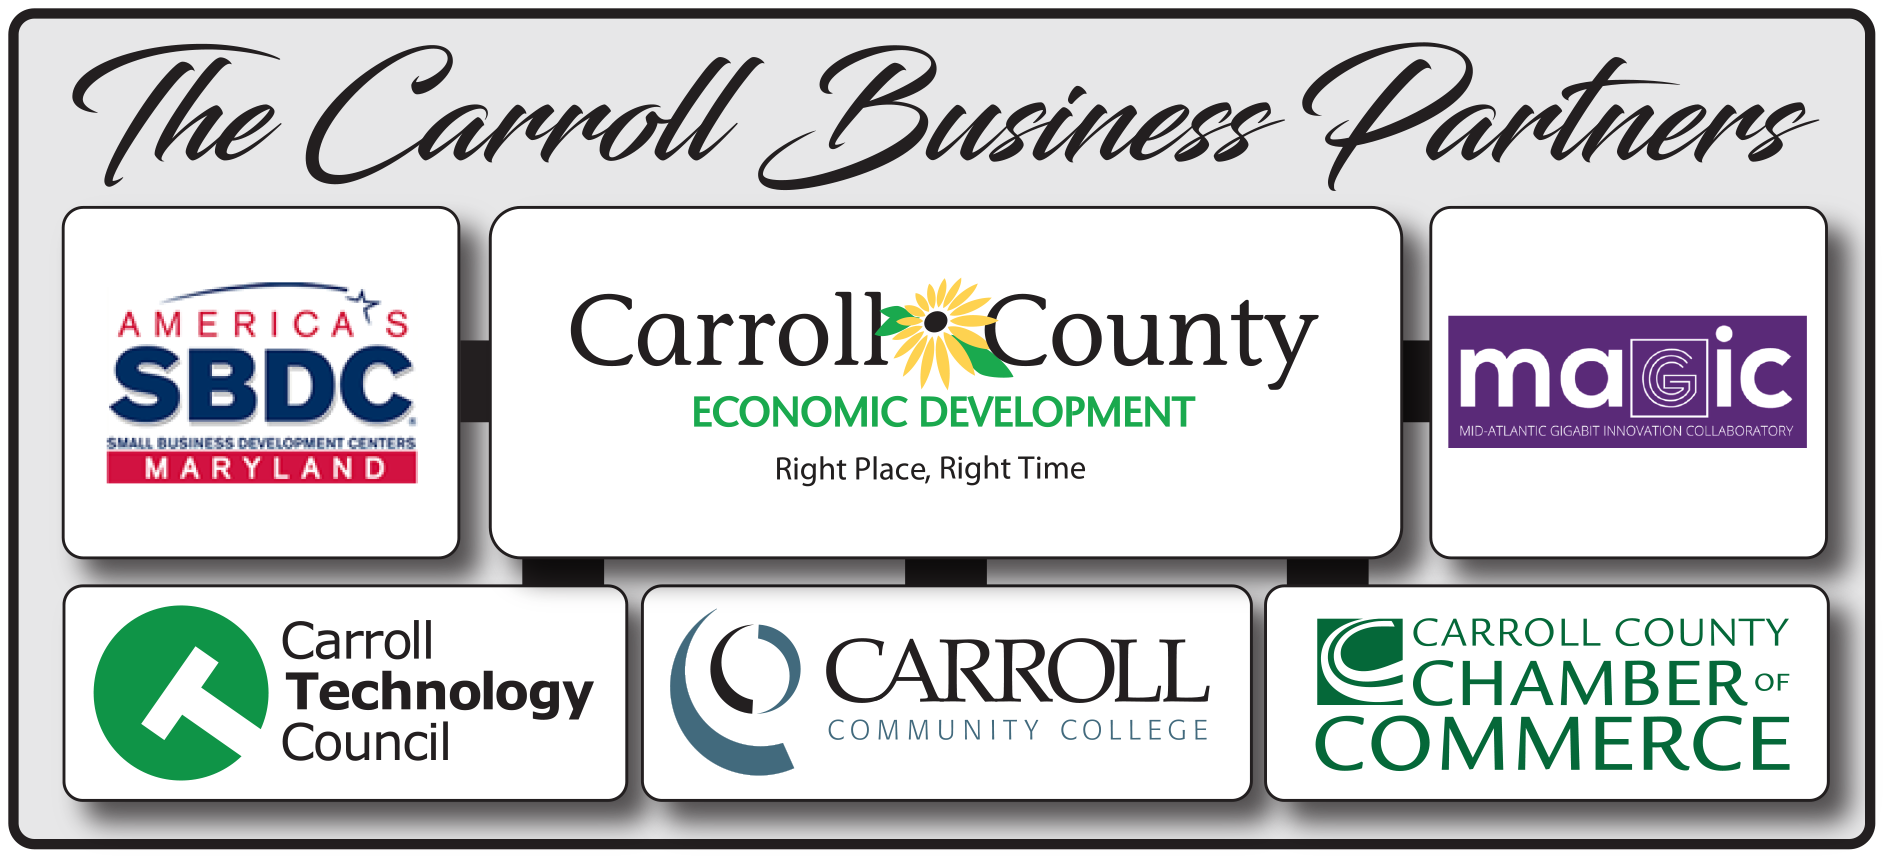 Carroll-Business-Partners-logos